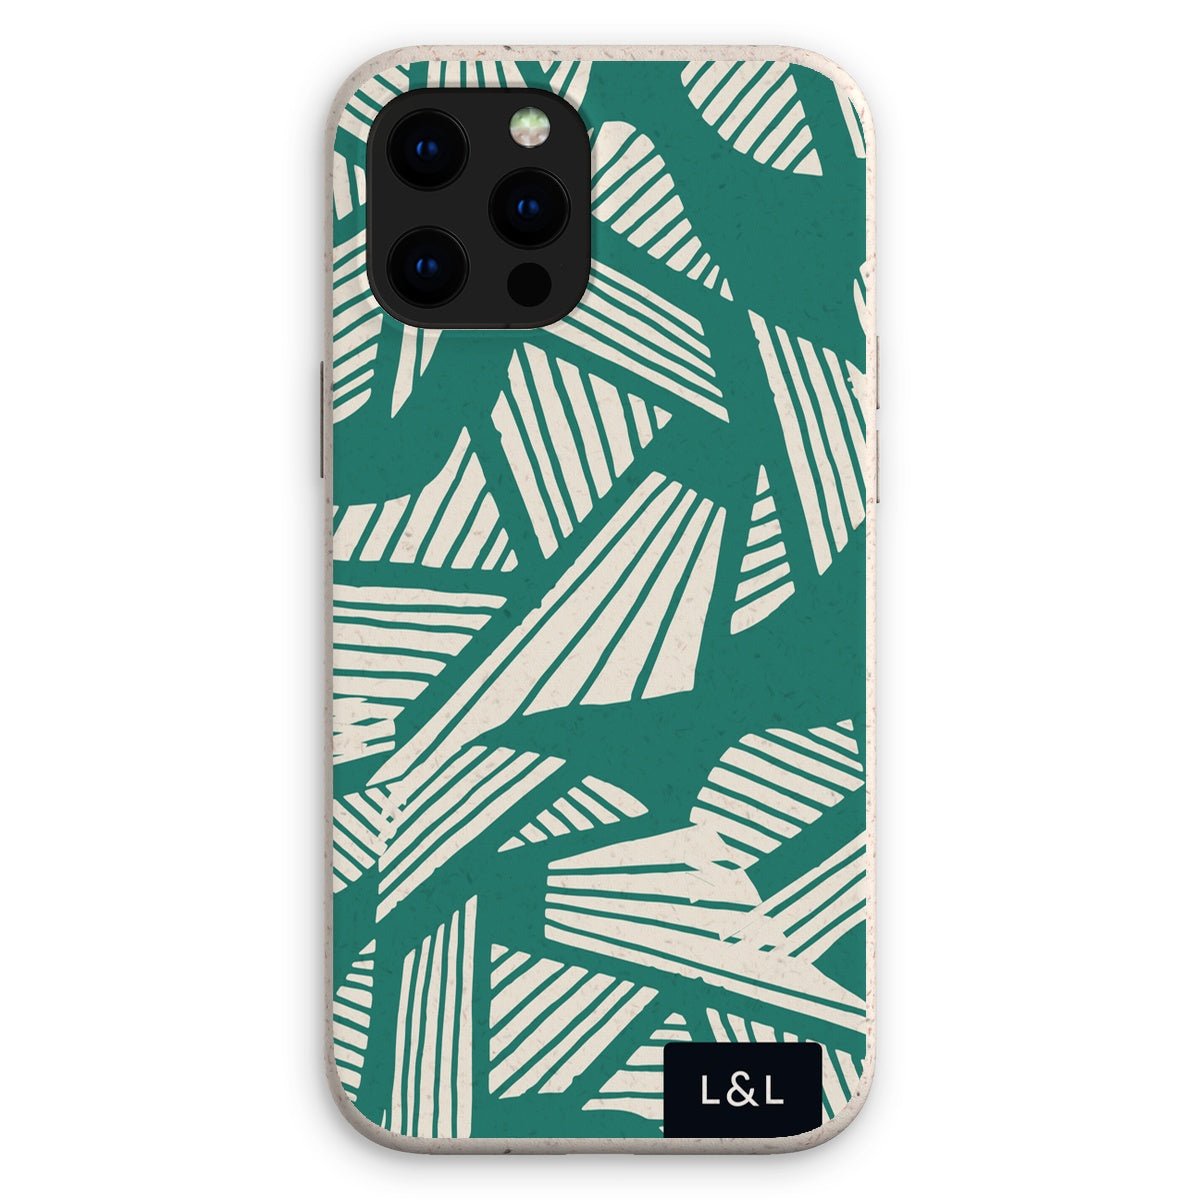 Desert island Eco Phone Case - Loam & Lore